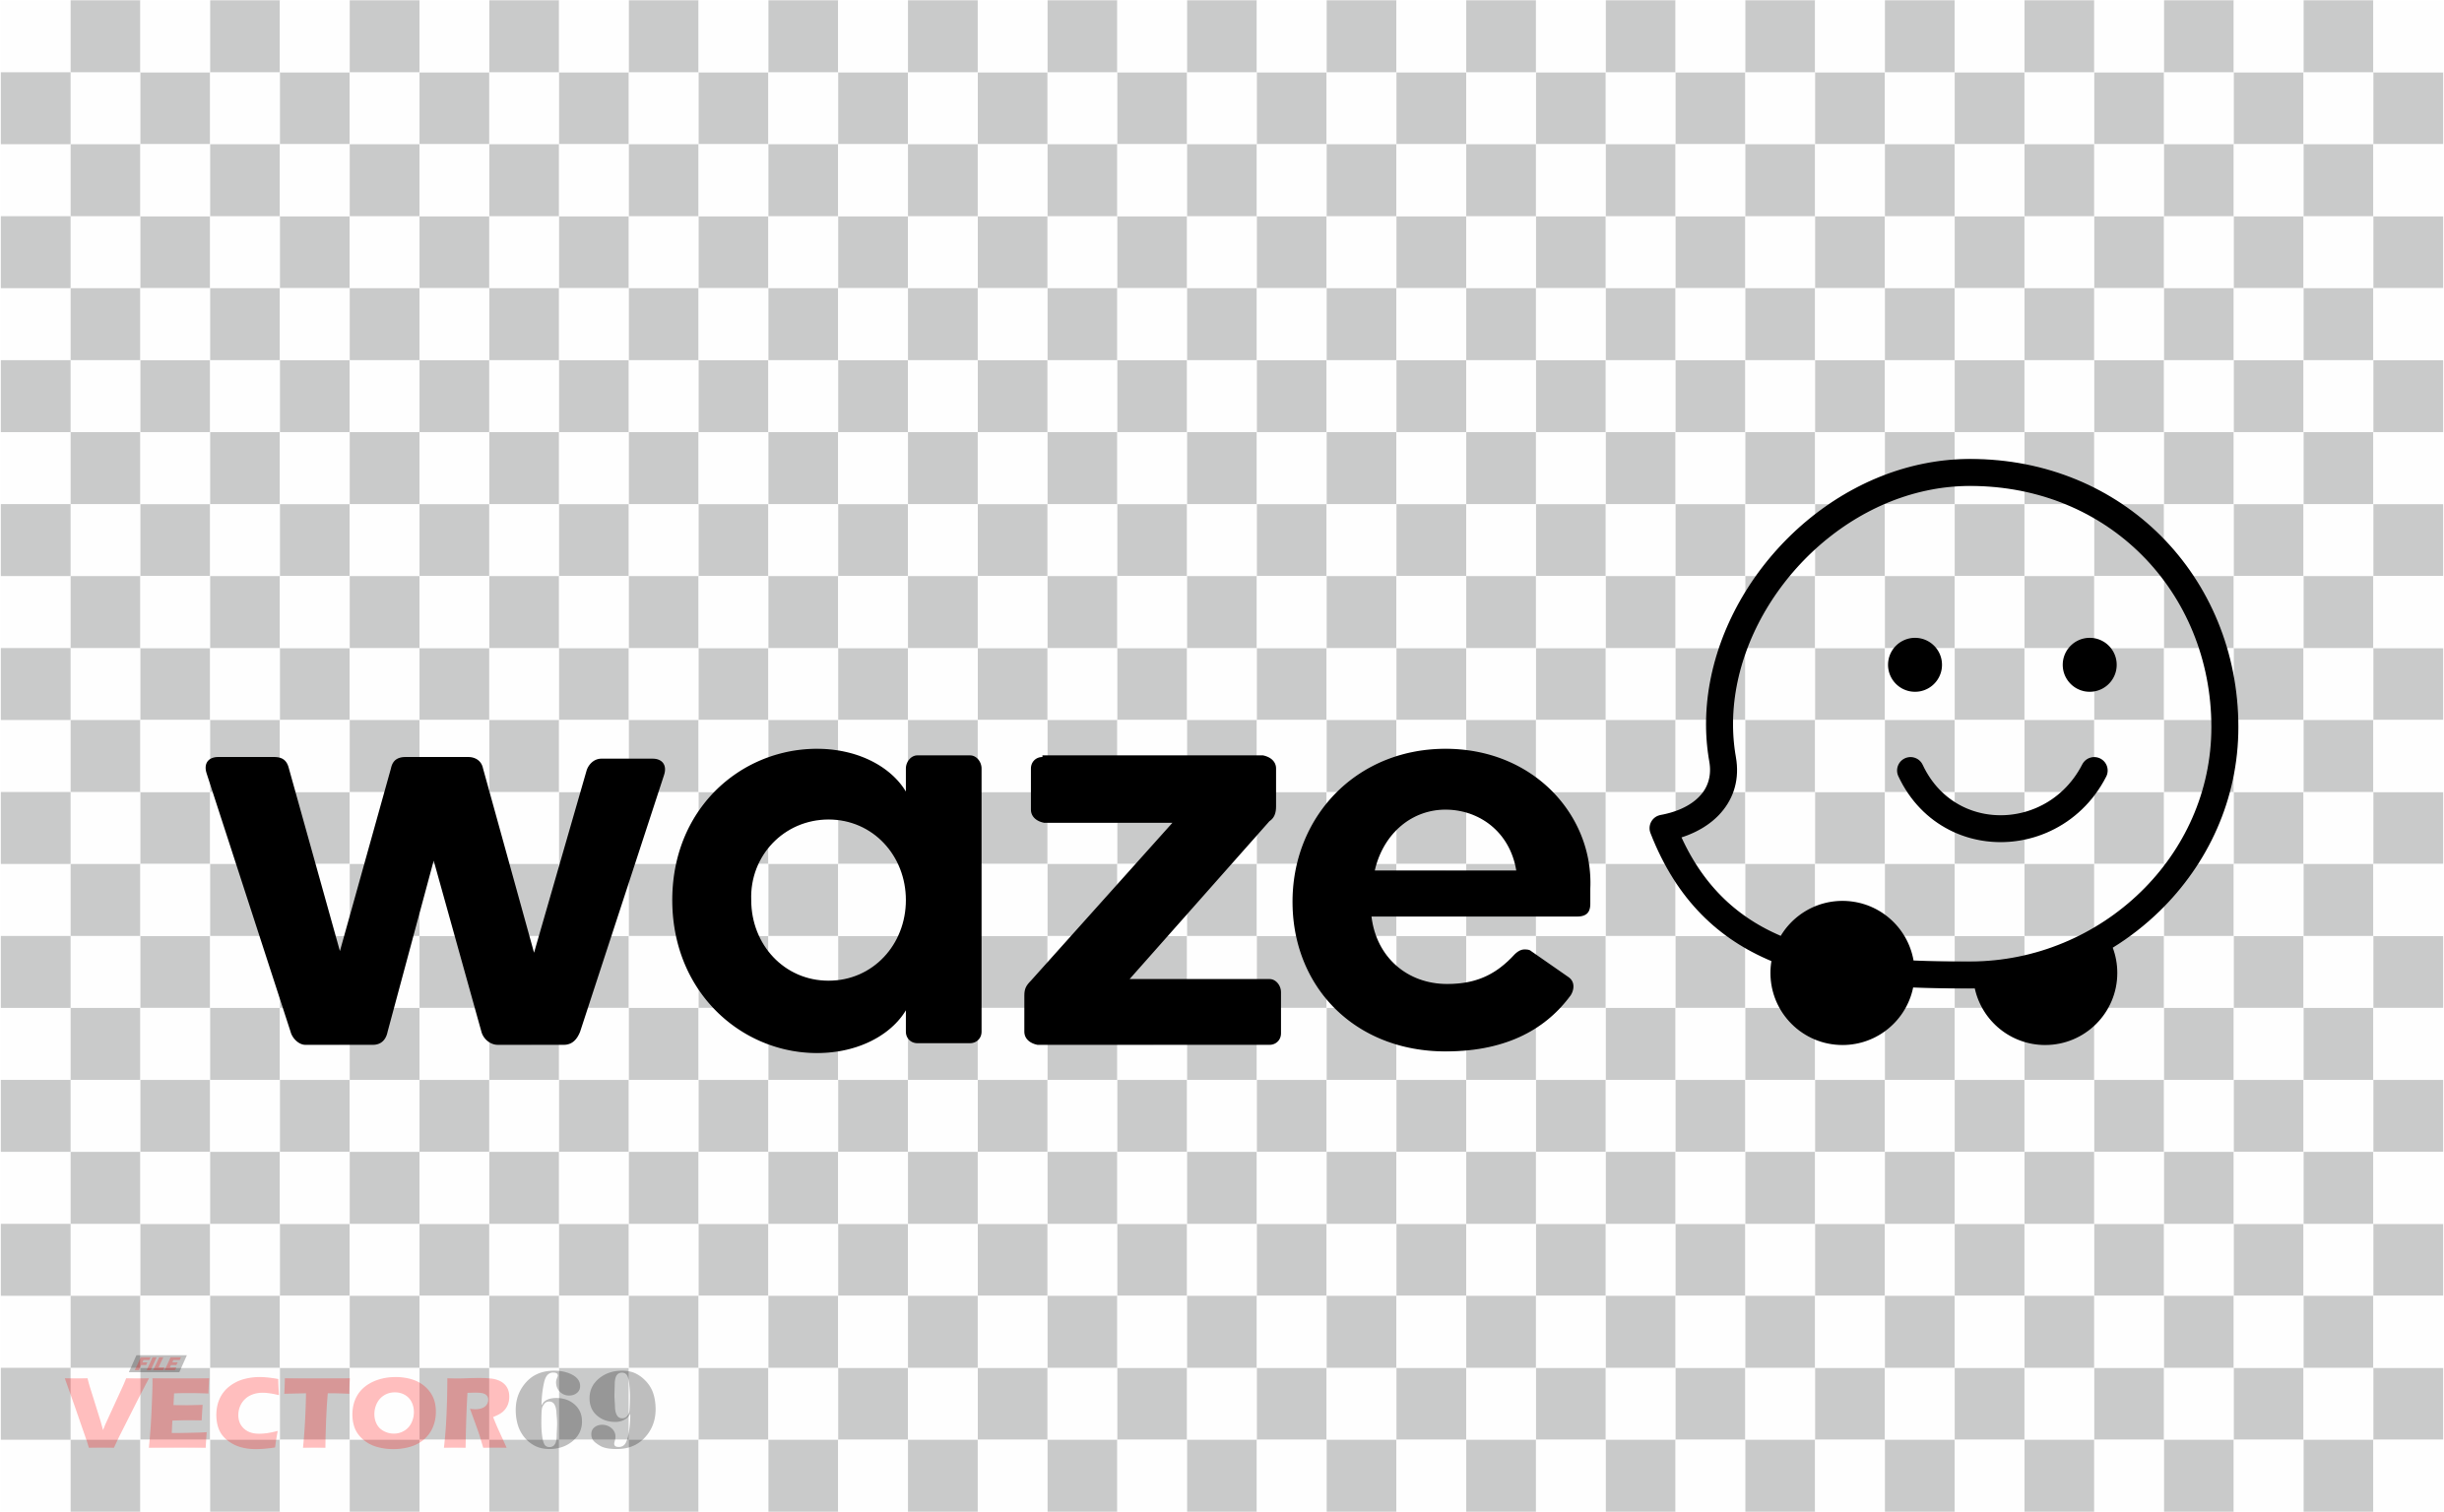 Waze New 2020 Logo - Download Vector File PNG (Portable Network Graphics)